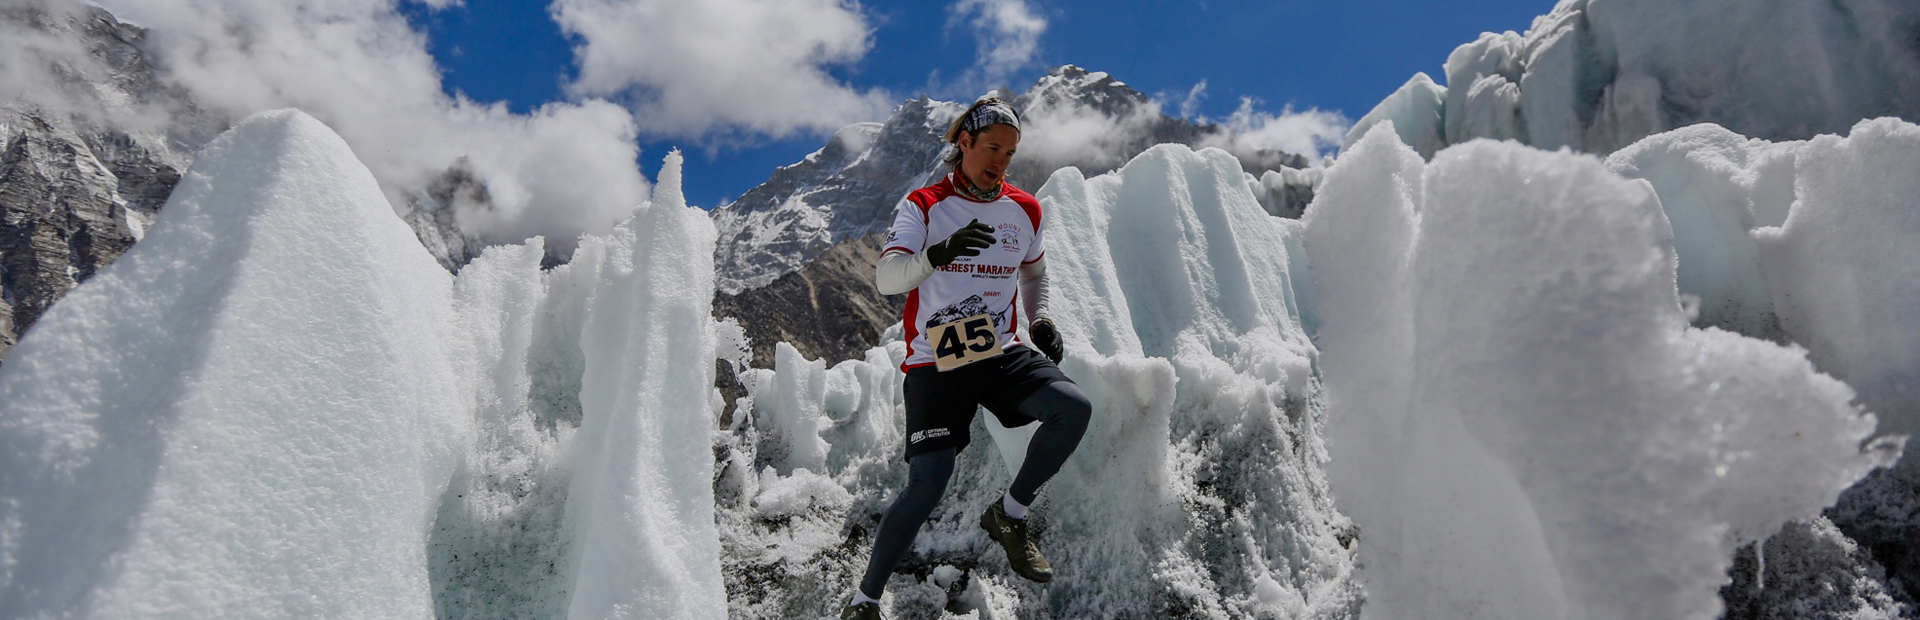 Elite personal trainer Shaun Stafford running the Tenzing Hillary Everest Marathon,